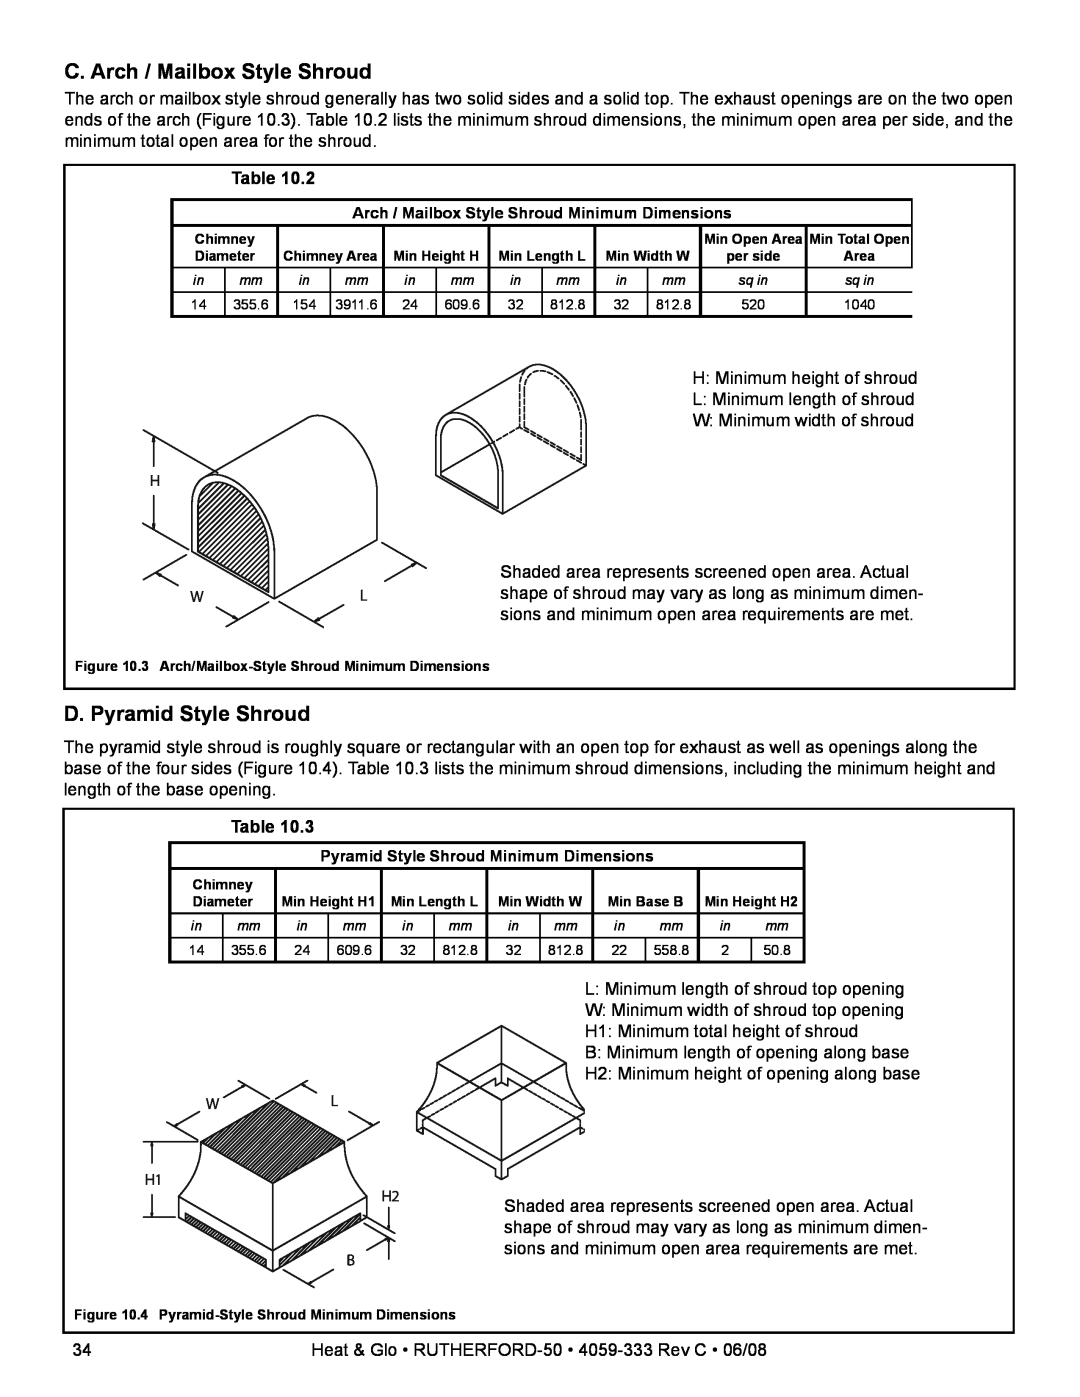 Heat & Glo LifeStyle 50 owner manual C. Arch / Mailbox Style Shroud, D. Pyramid Style Shroud 